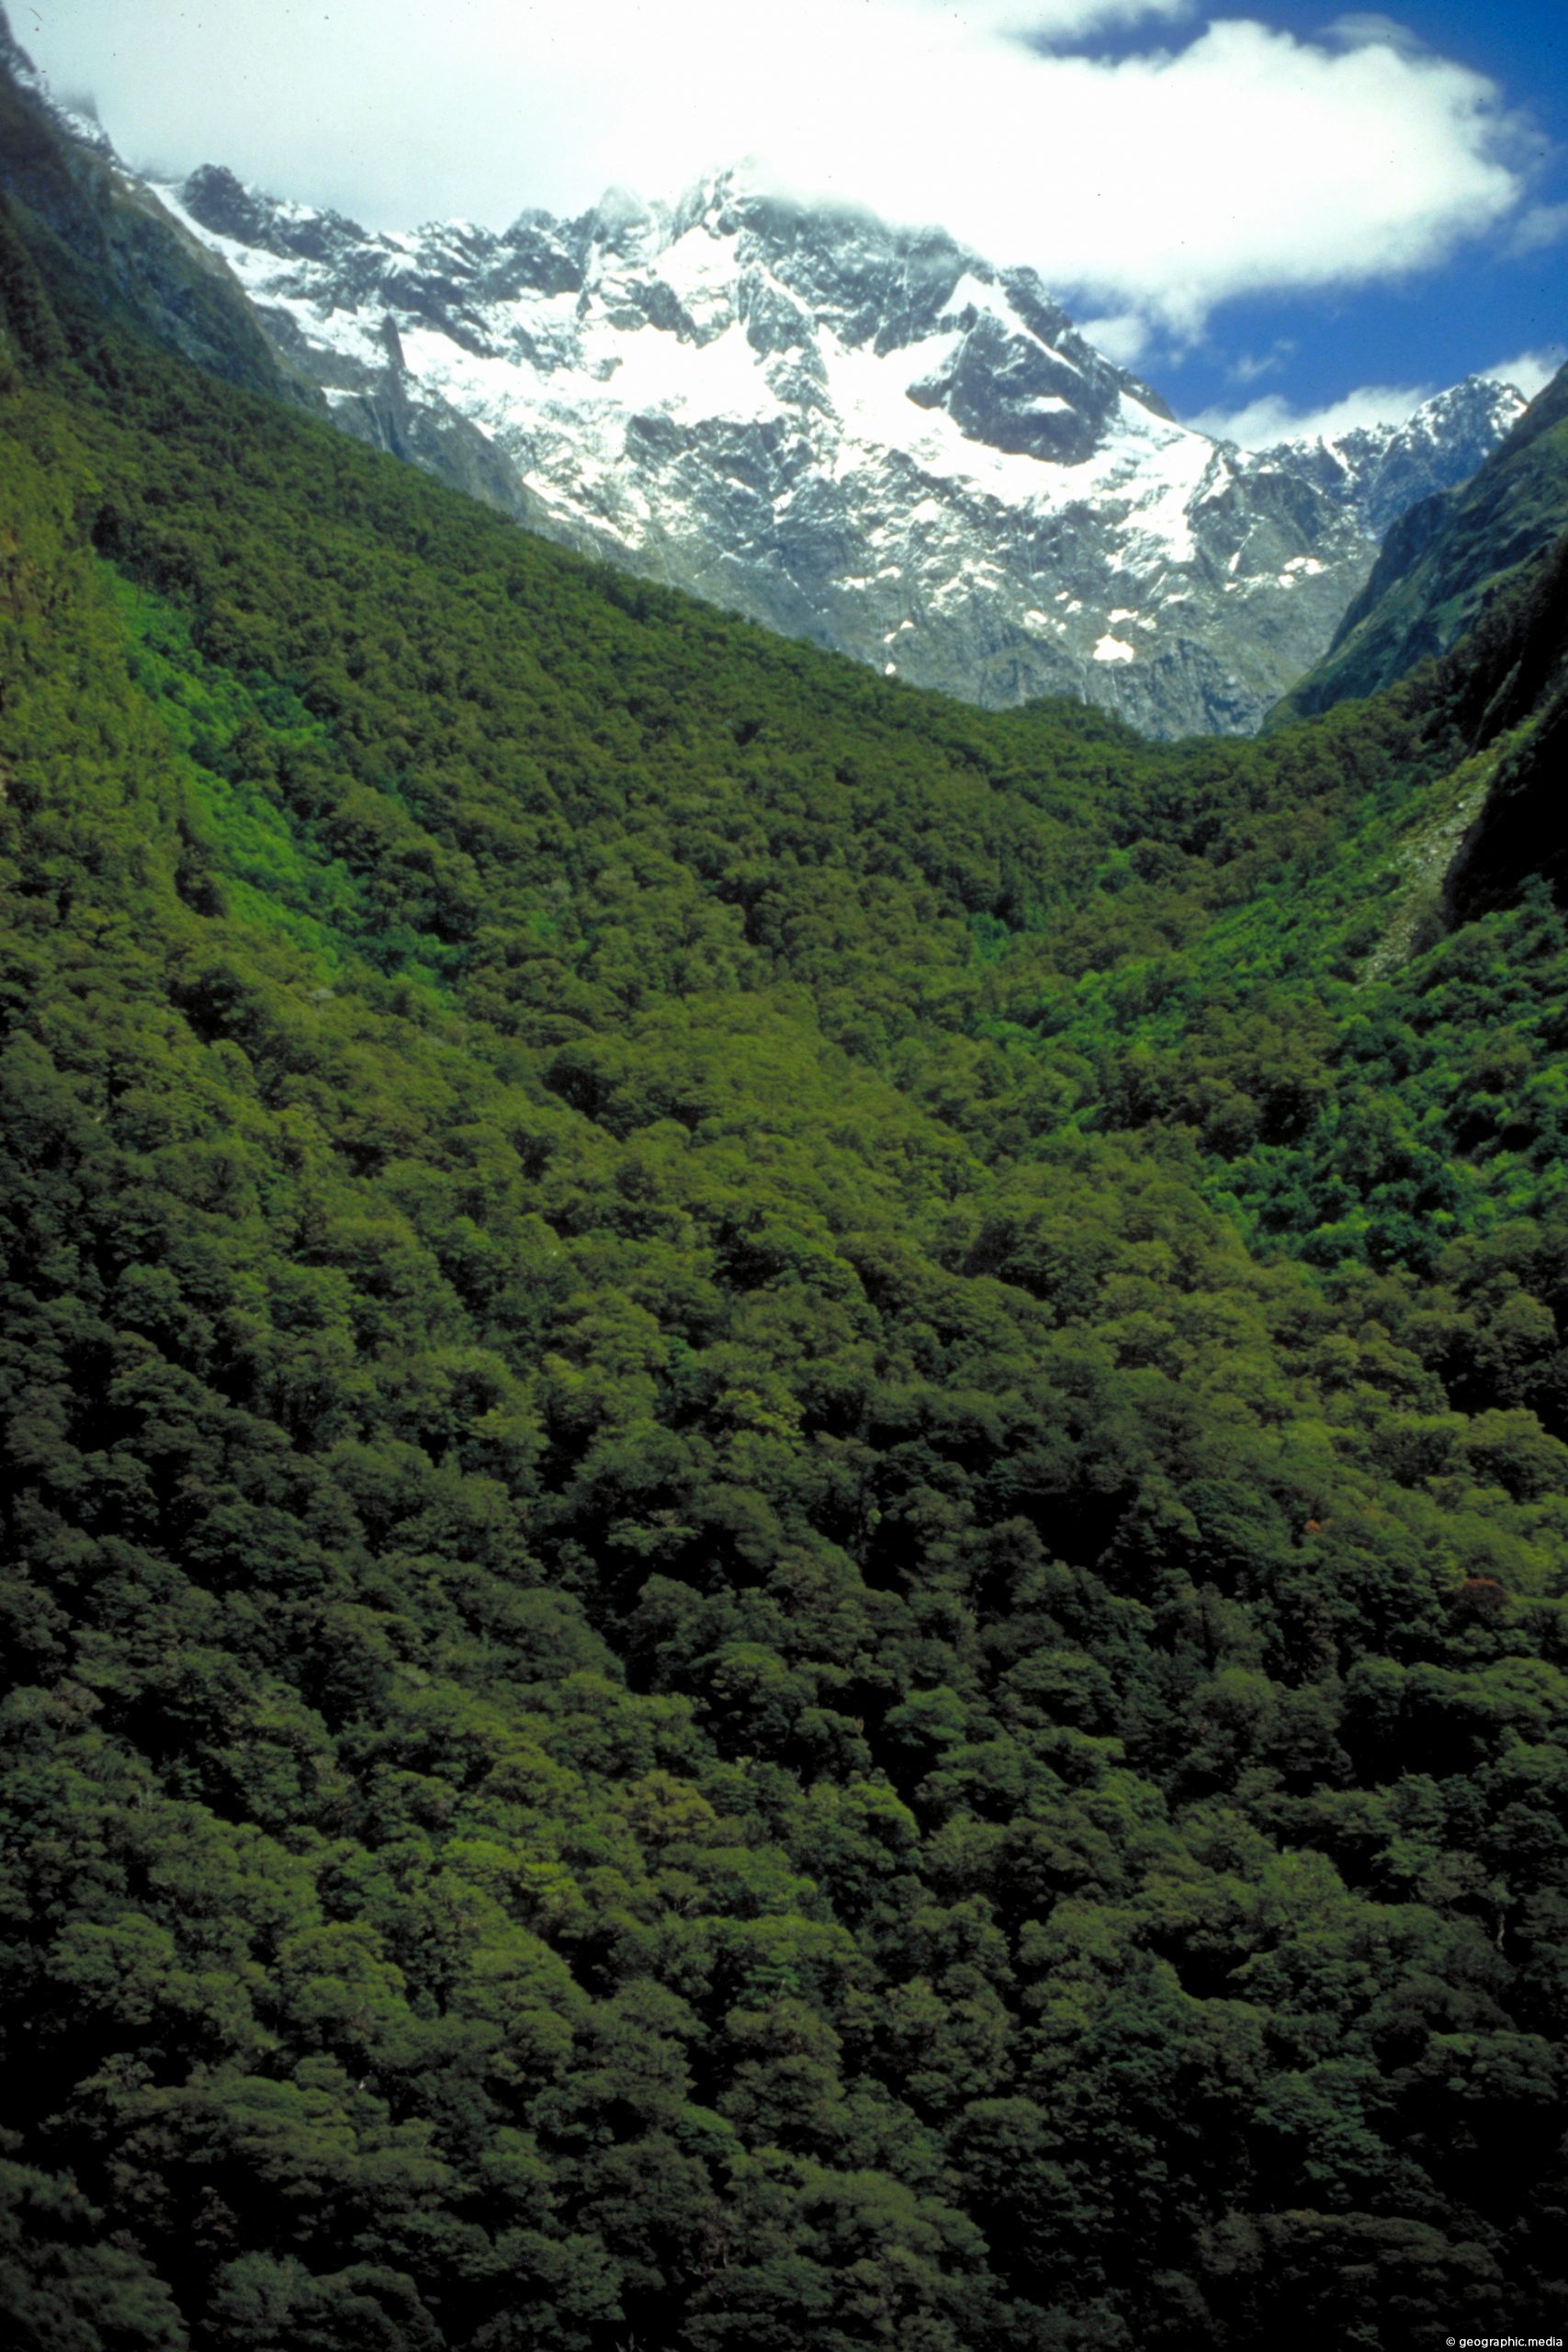 A slice of Fiordland National Park